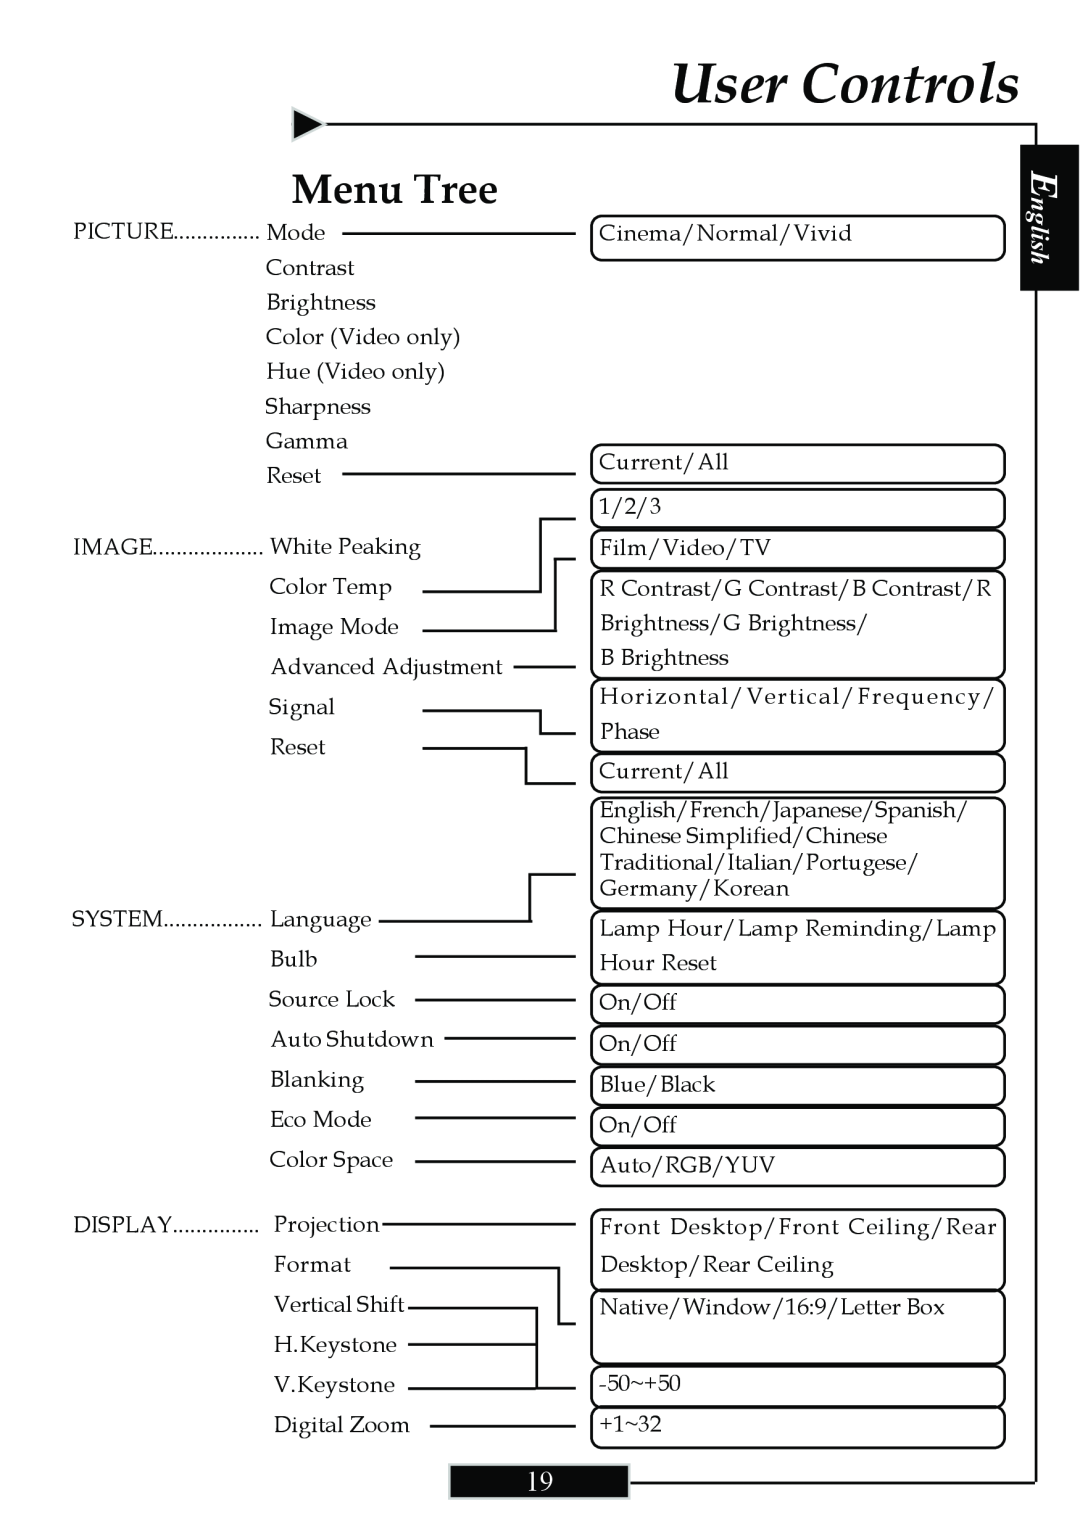 Optoma Technology H77 manual Menu Tree, User Controls, English 